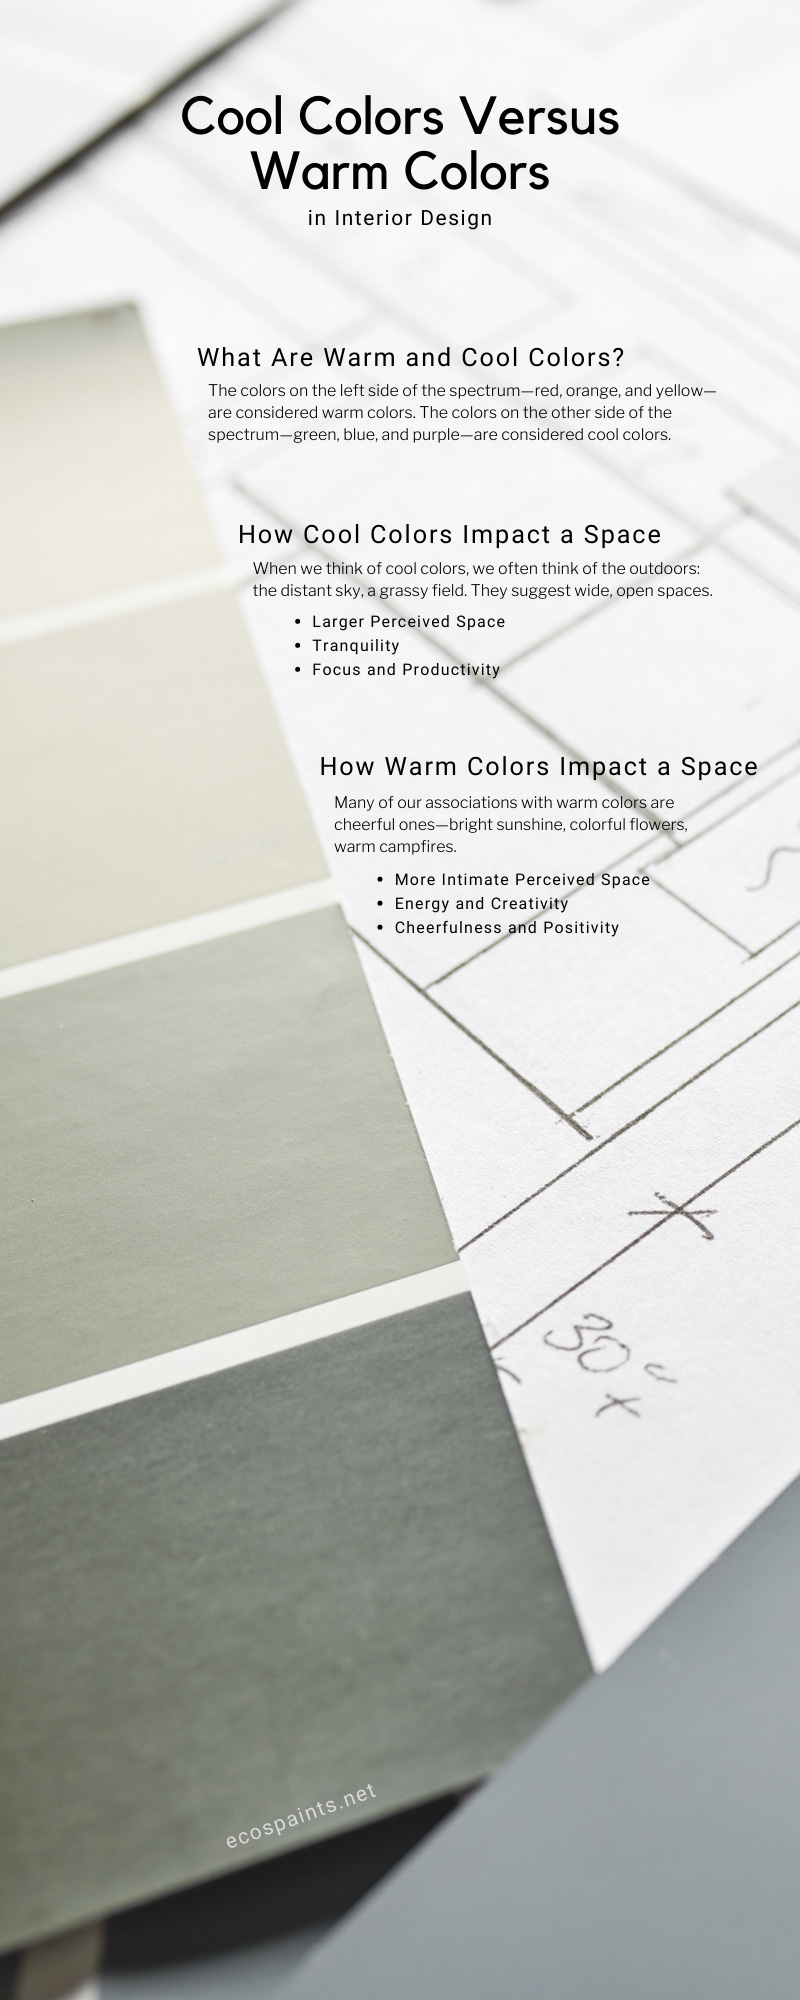 Cool Colors Versus Warm Colors in Interior Design